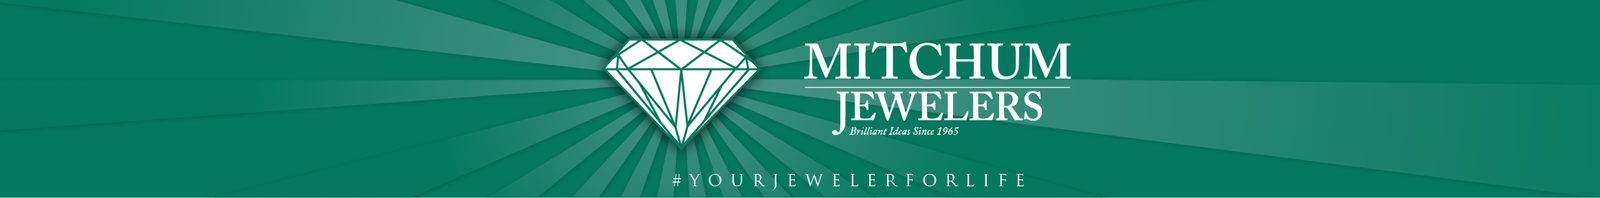 Mitchum Jewelers Logo 